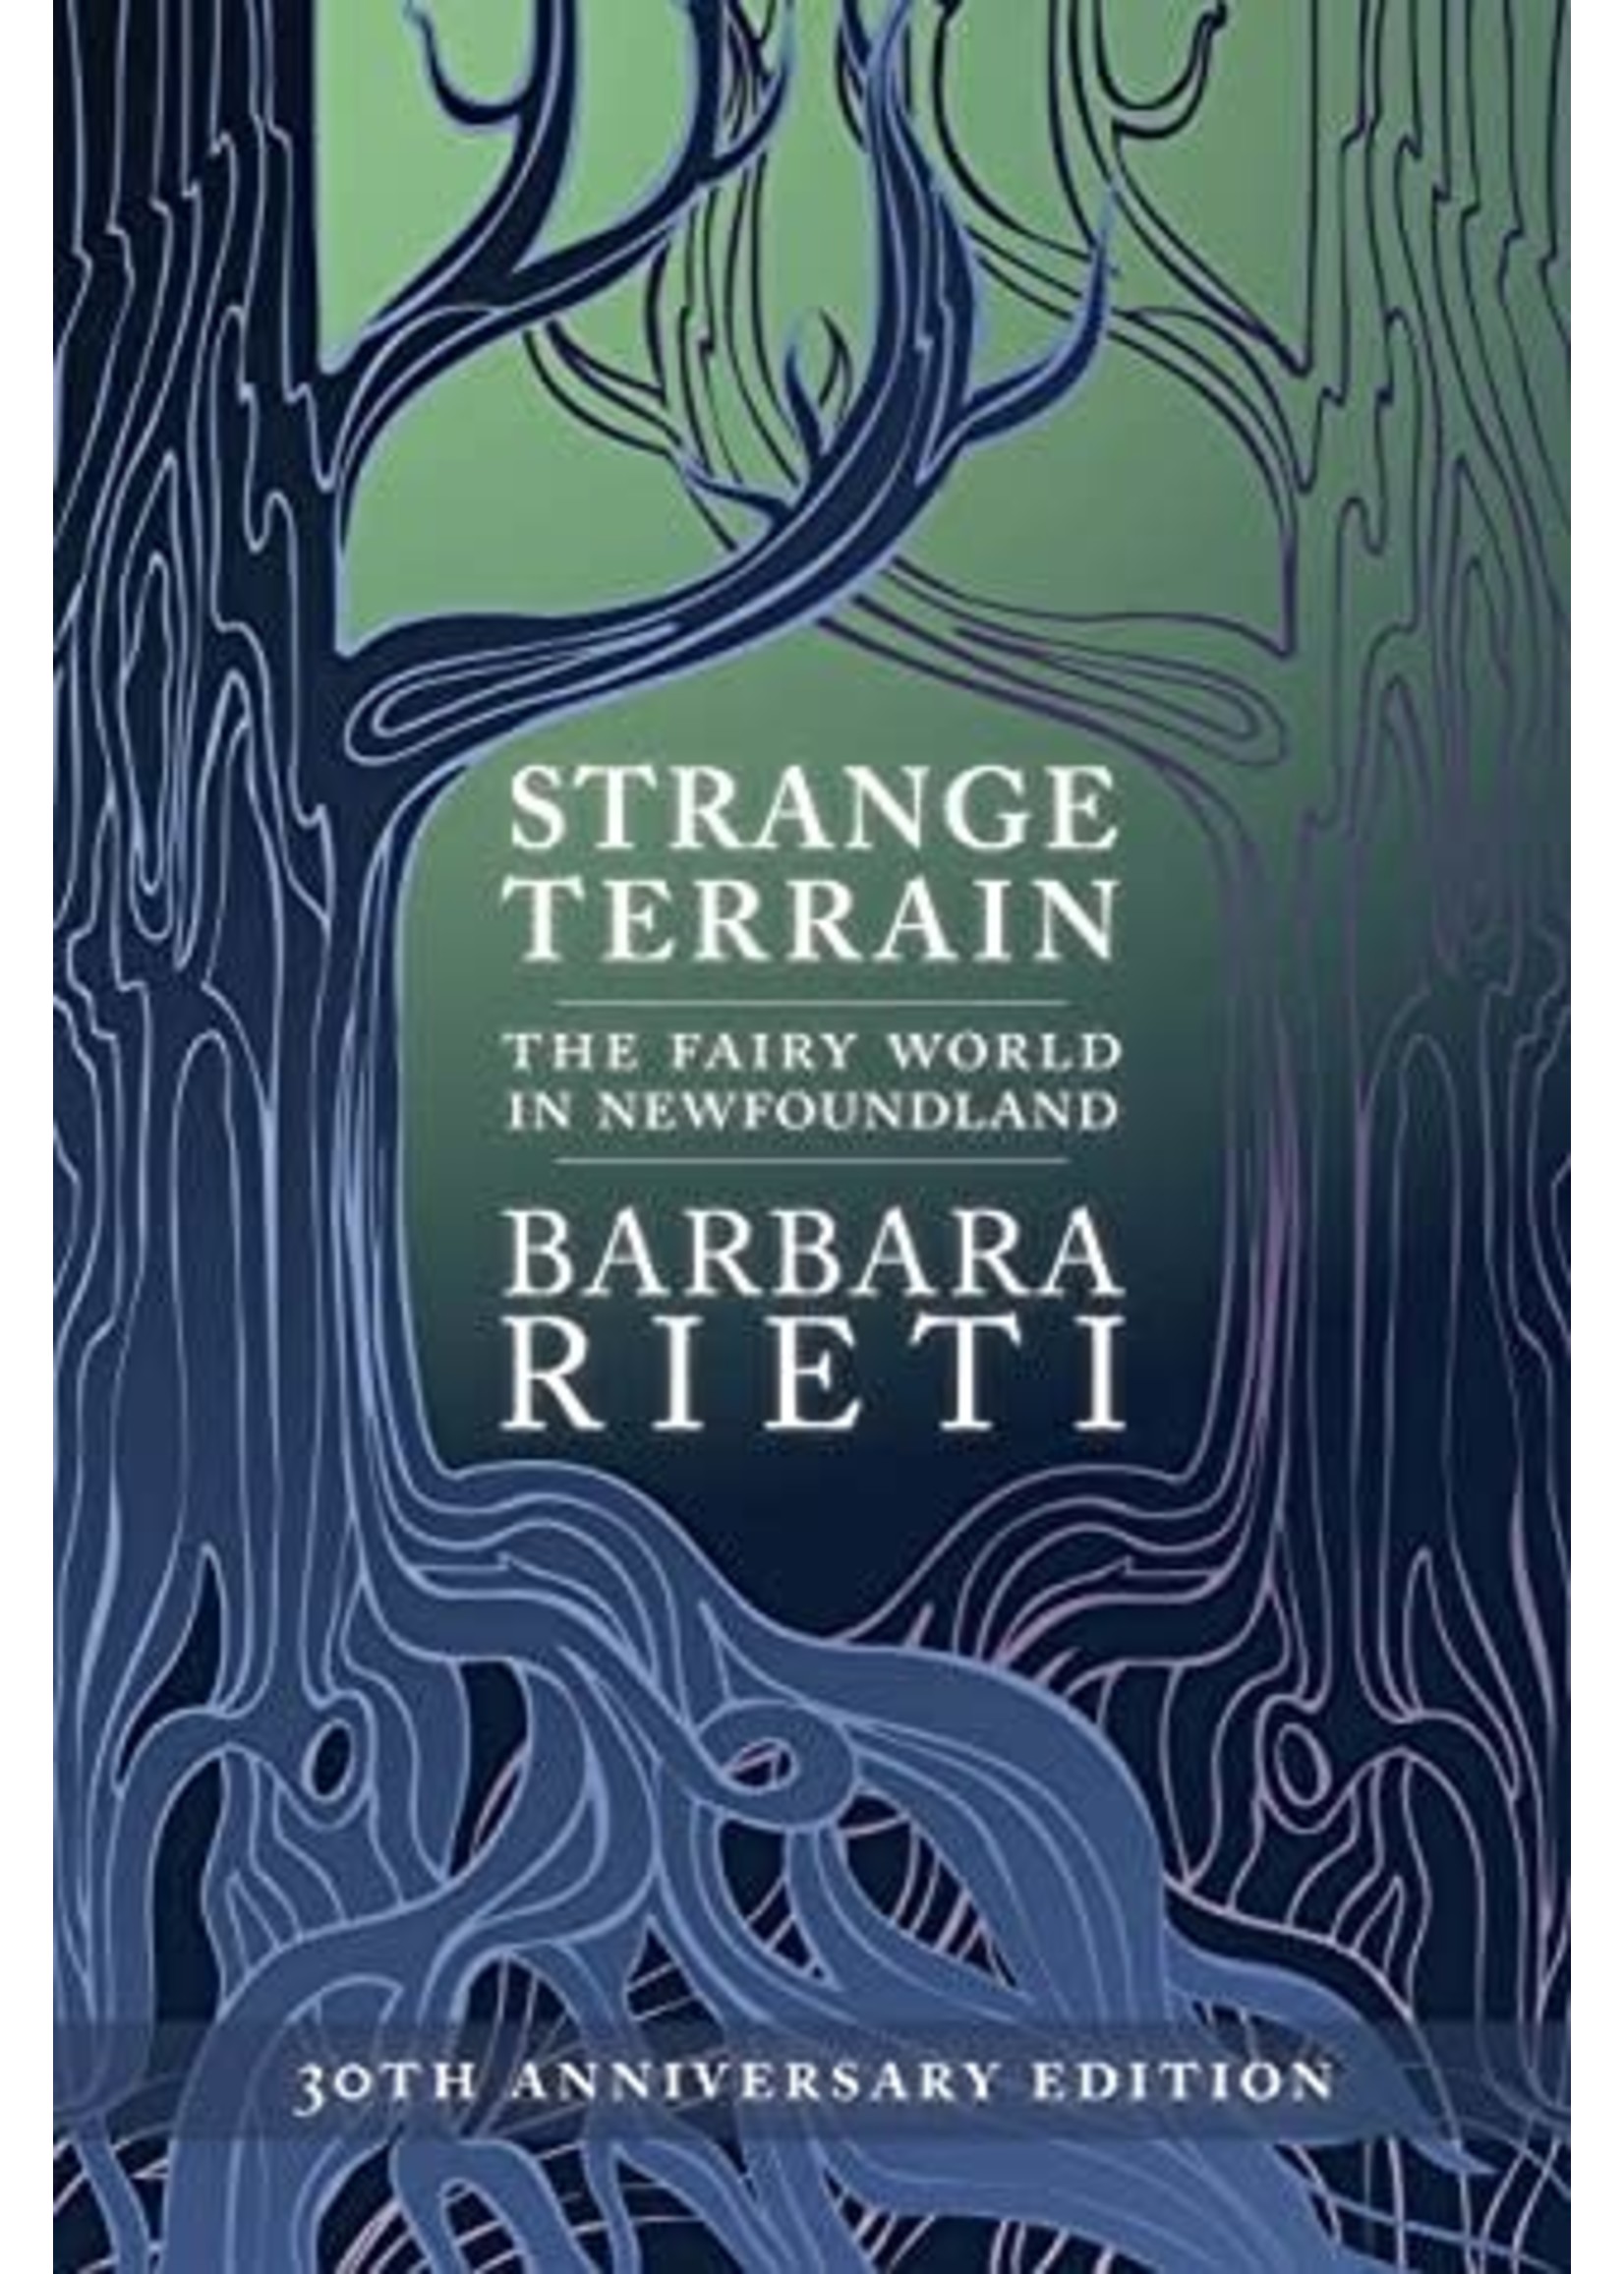 Strange Terrain: The Fairy World in Newfoundland by Barbara Rieti